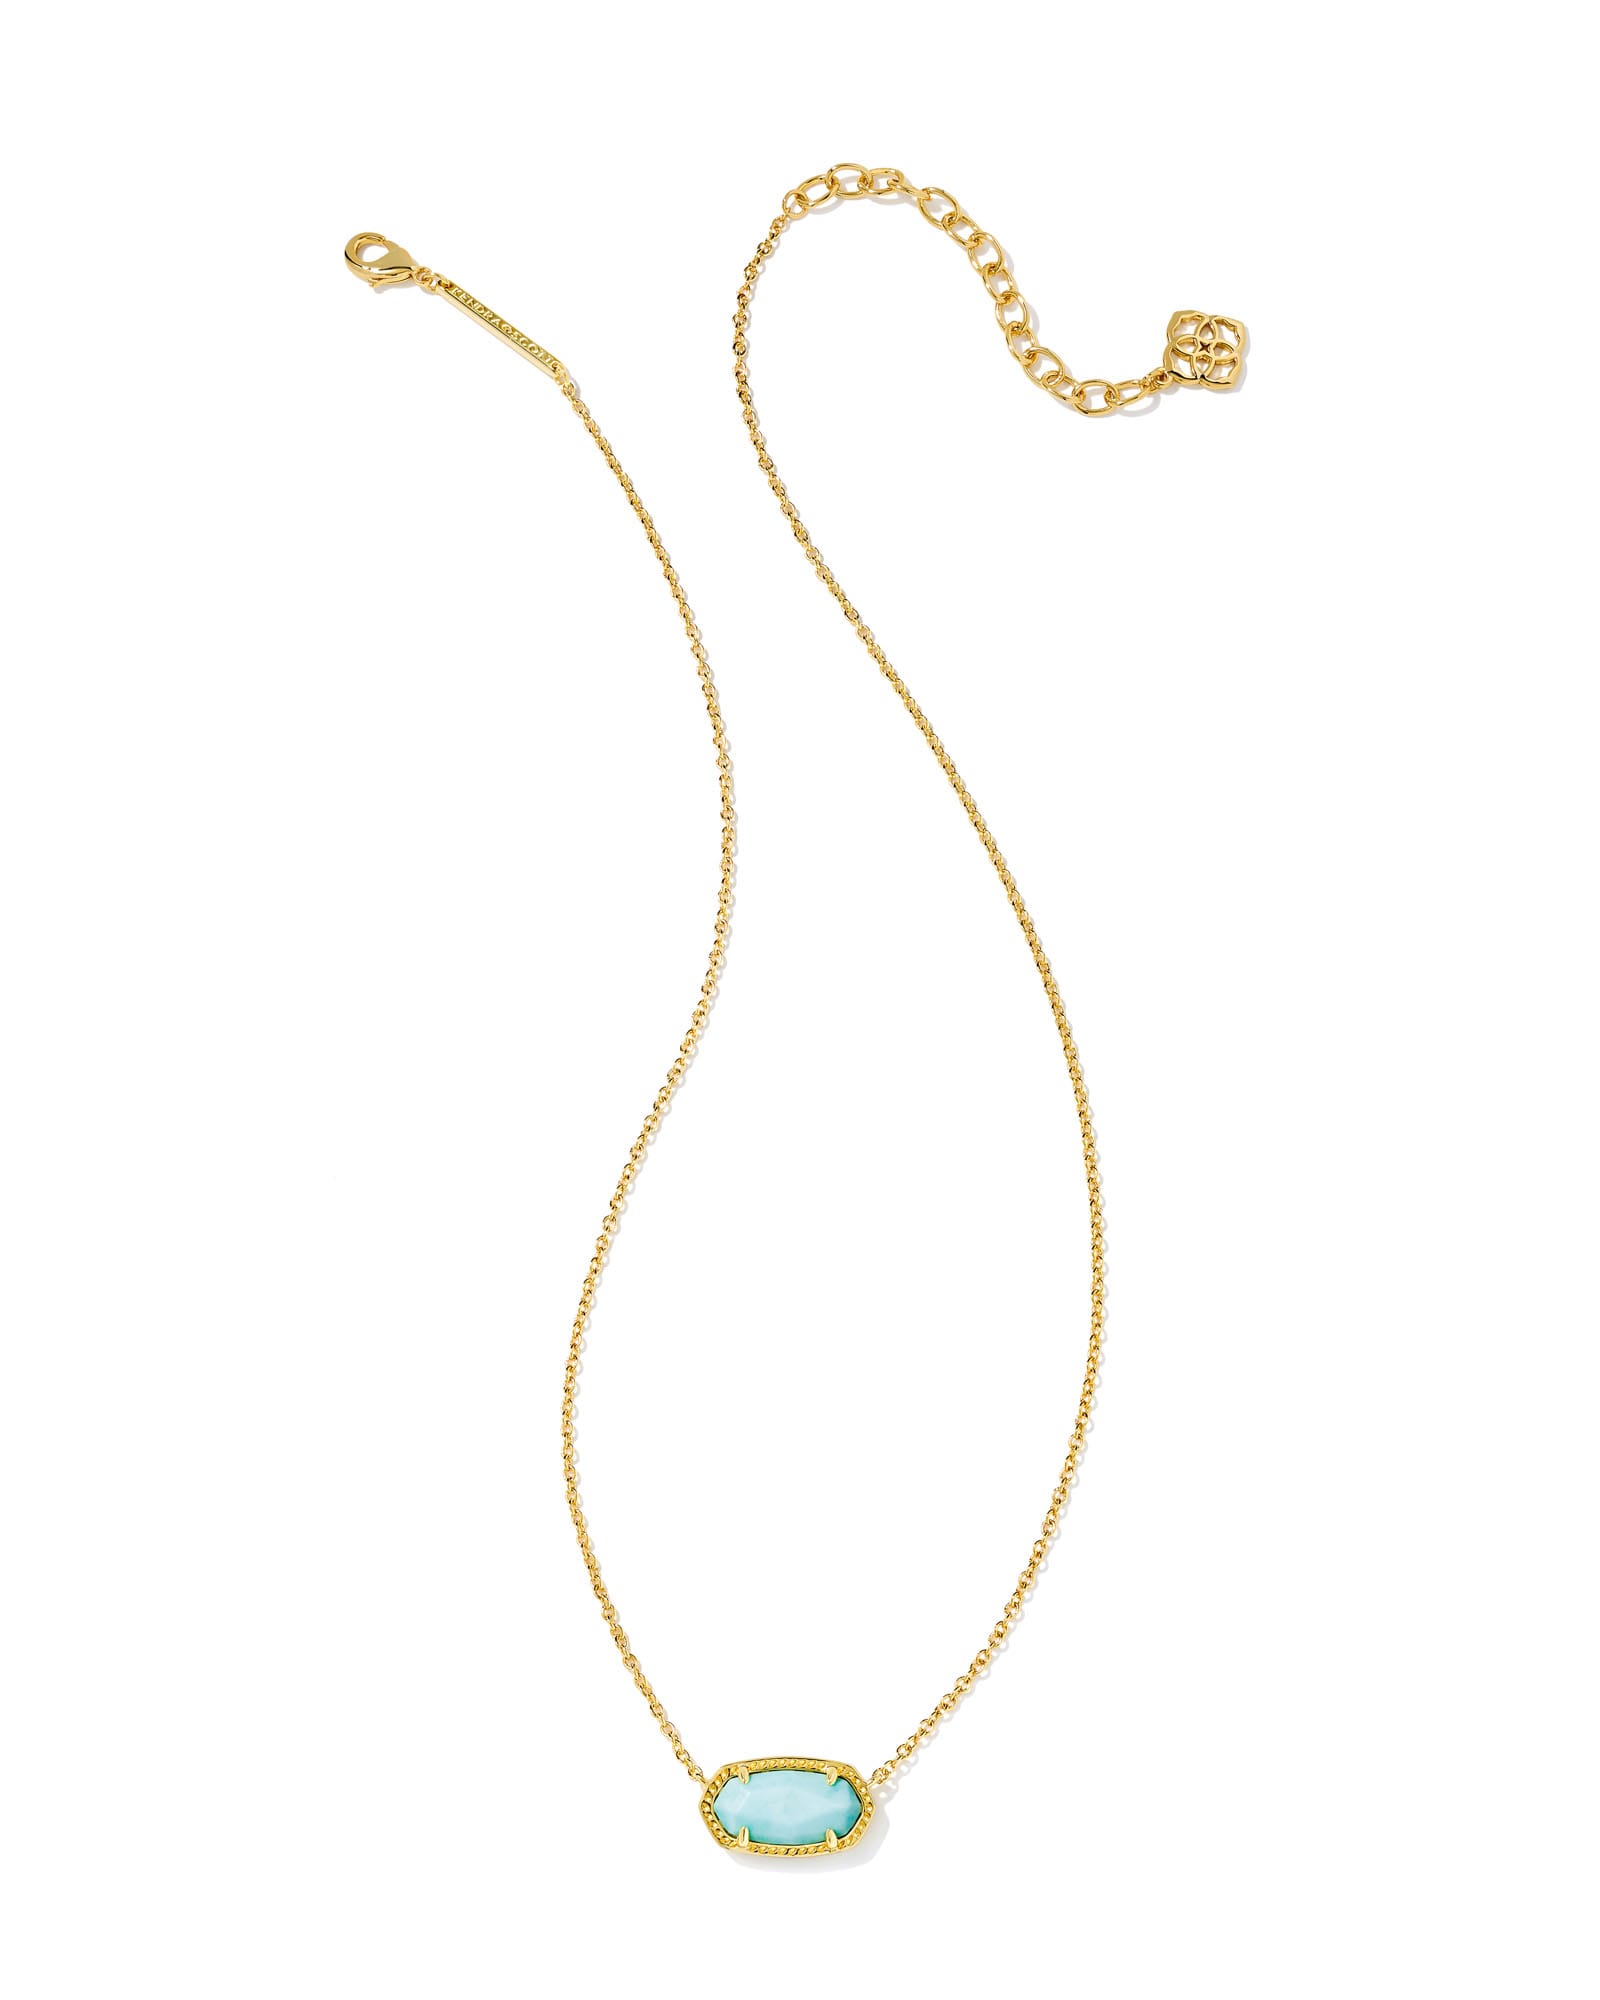 Elisa Gold Pendant Necklace in Light Blue Magnesite